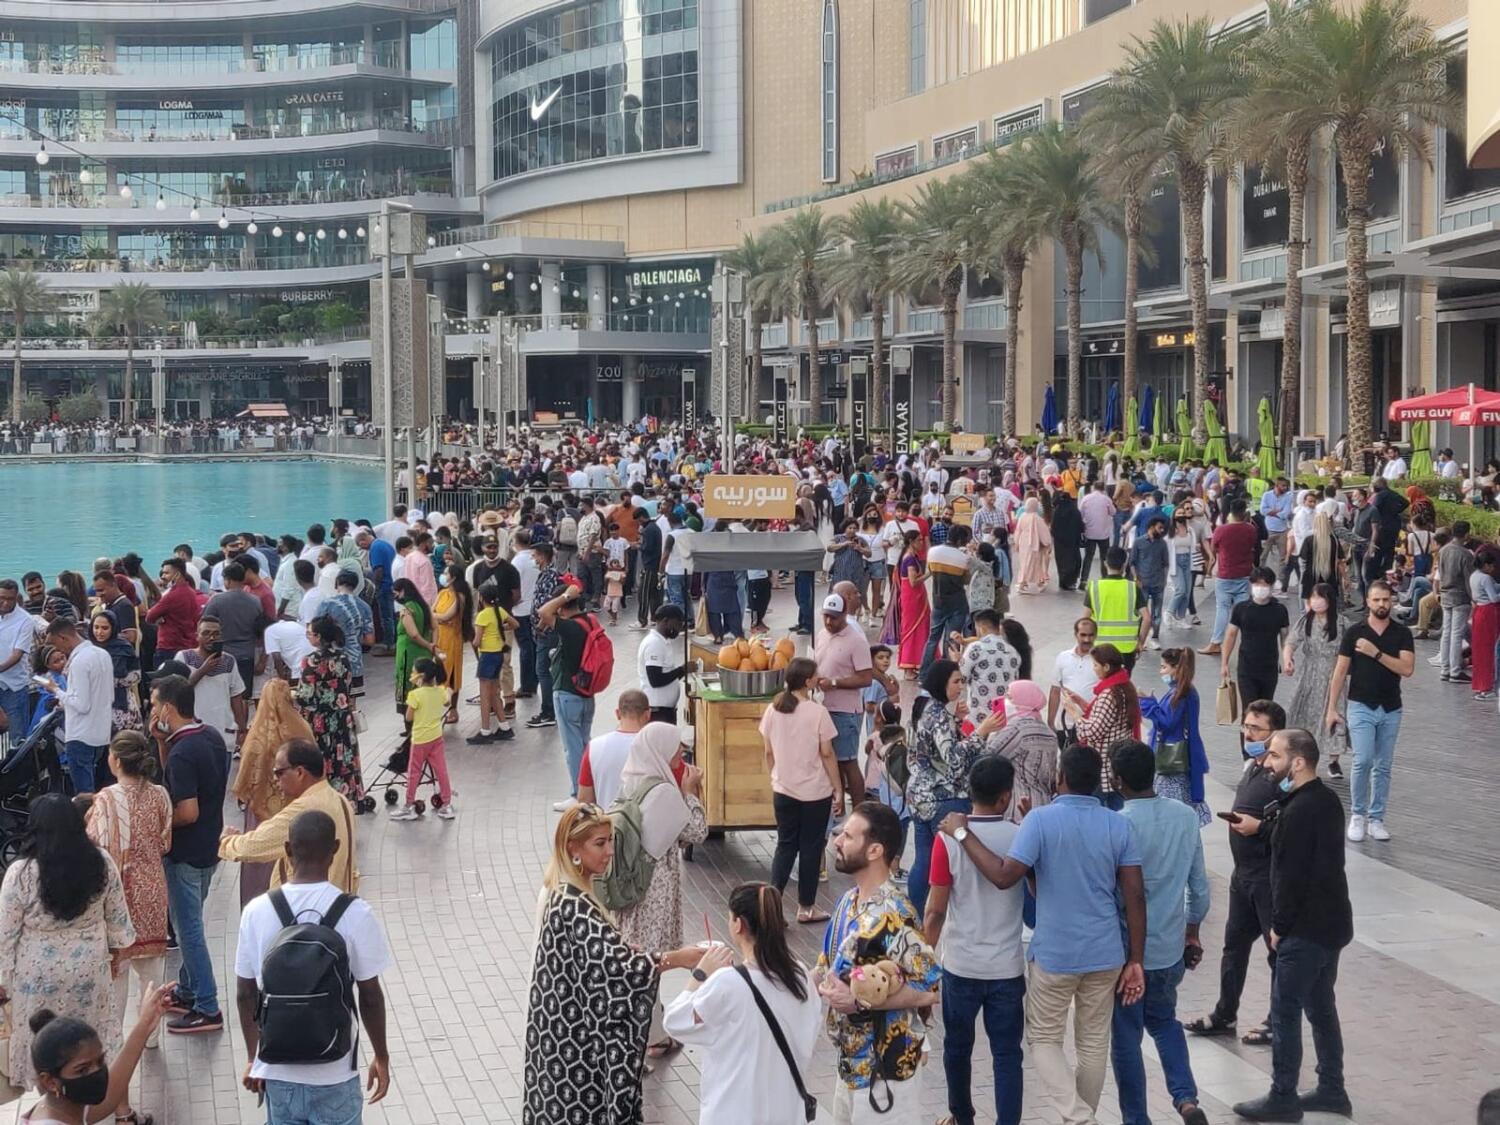 The Dubai Mall packed with visitors on a Sunday during Eid Al Adha break. Photo: Neeraj Murali